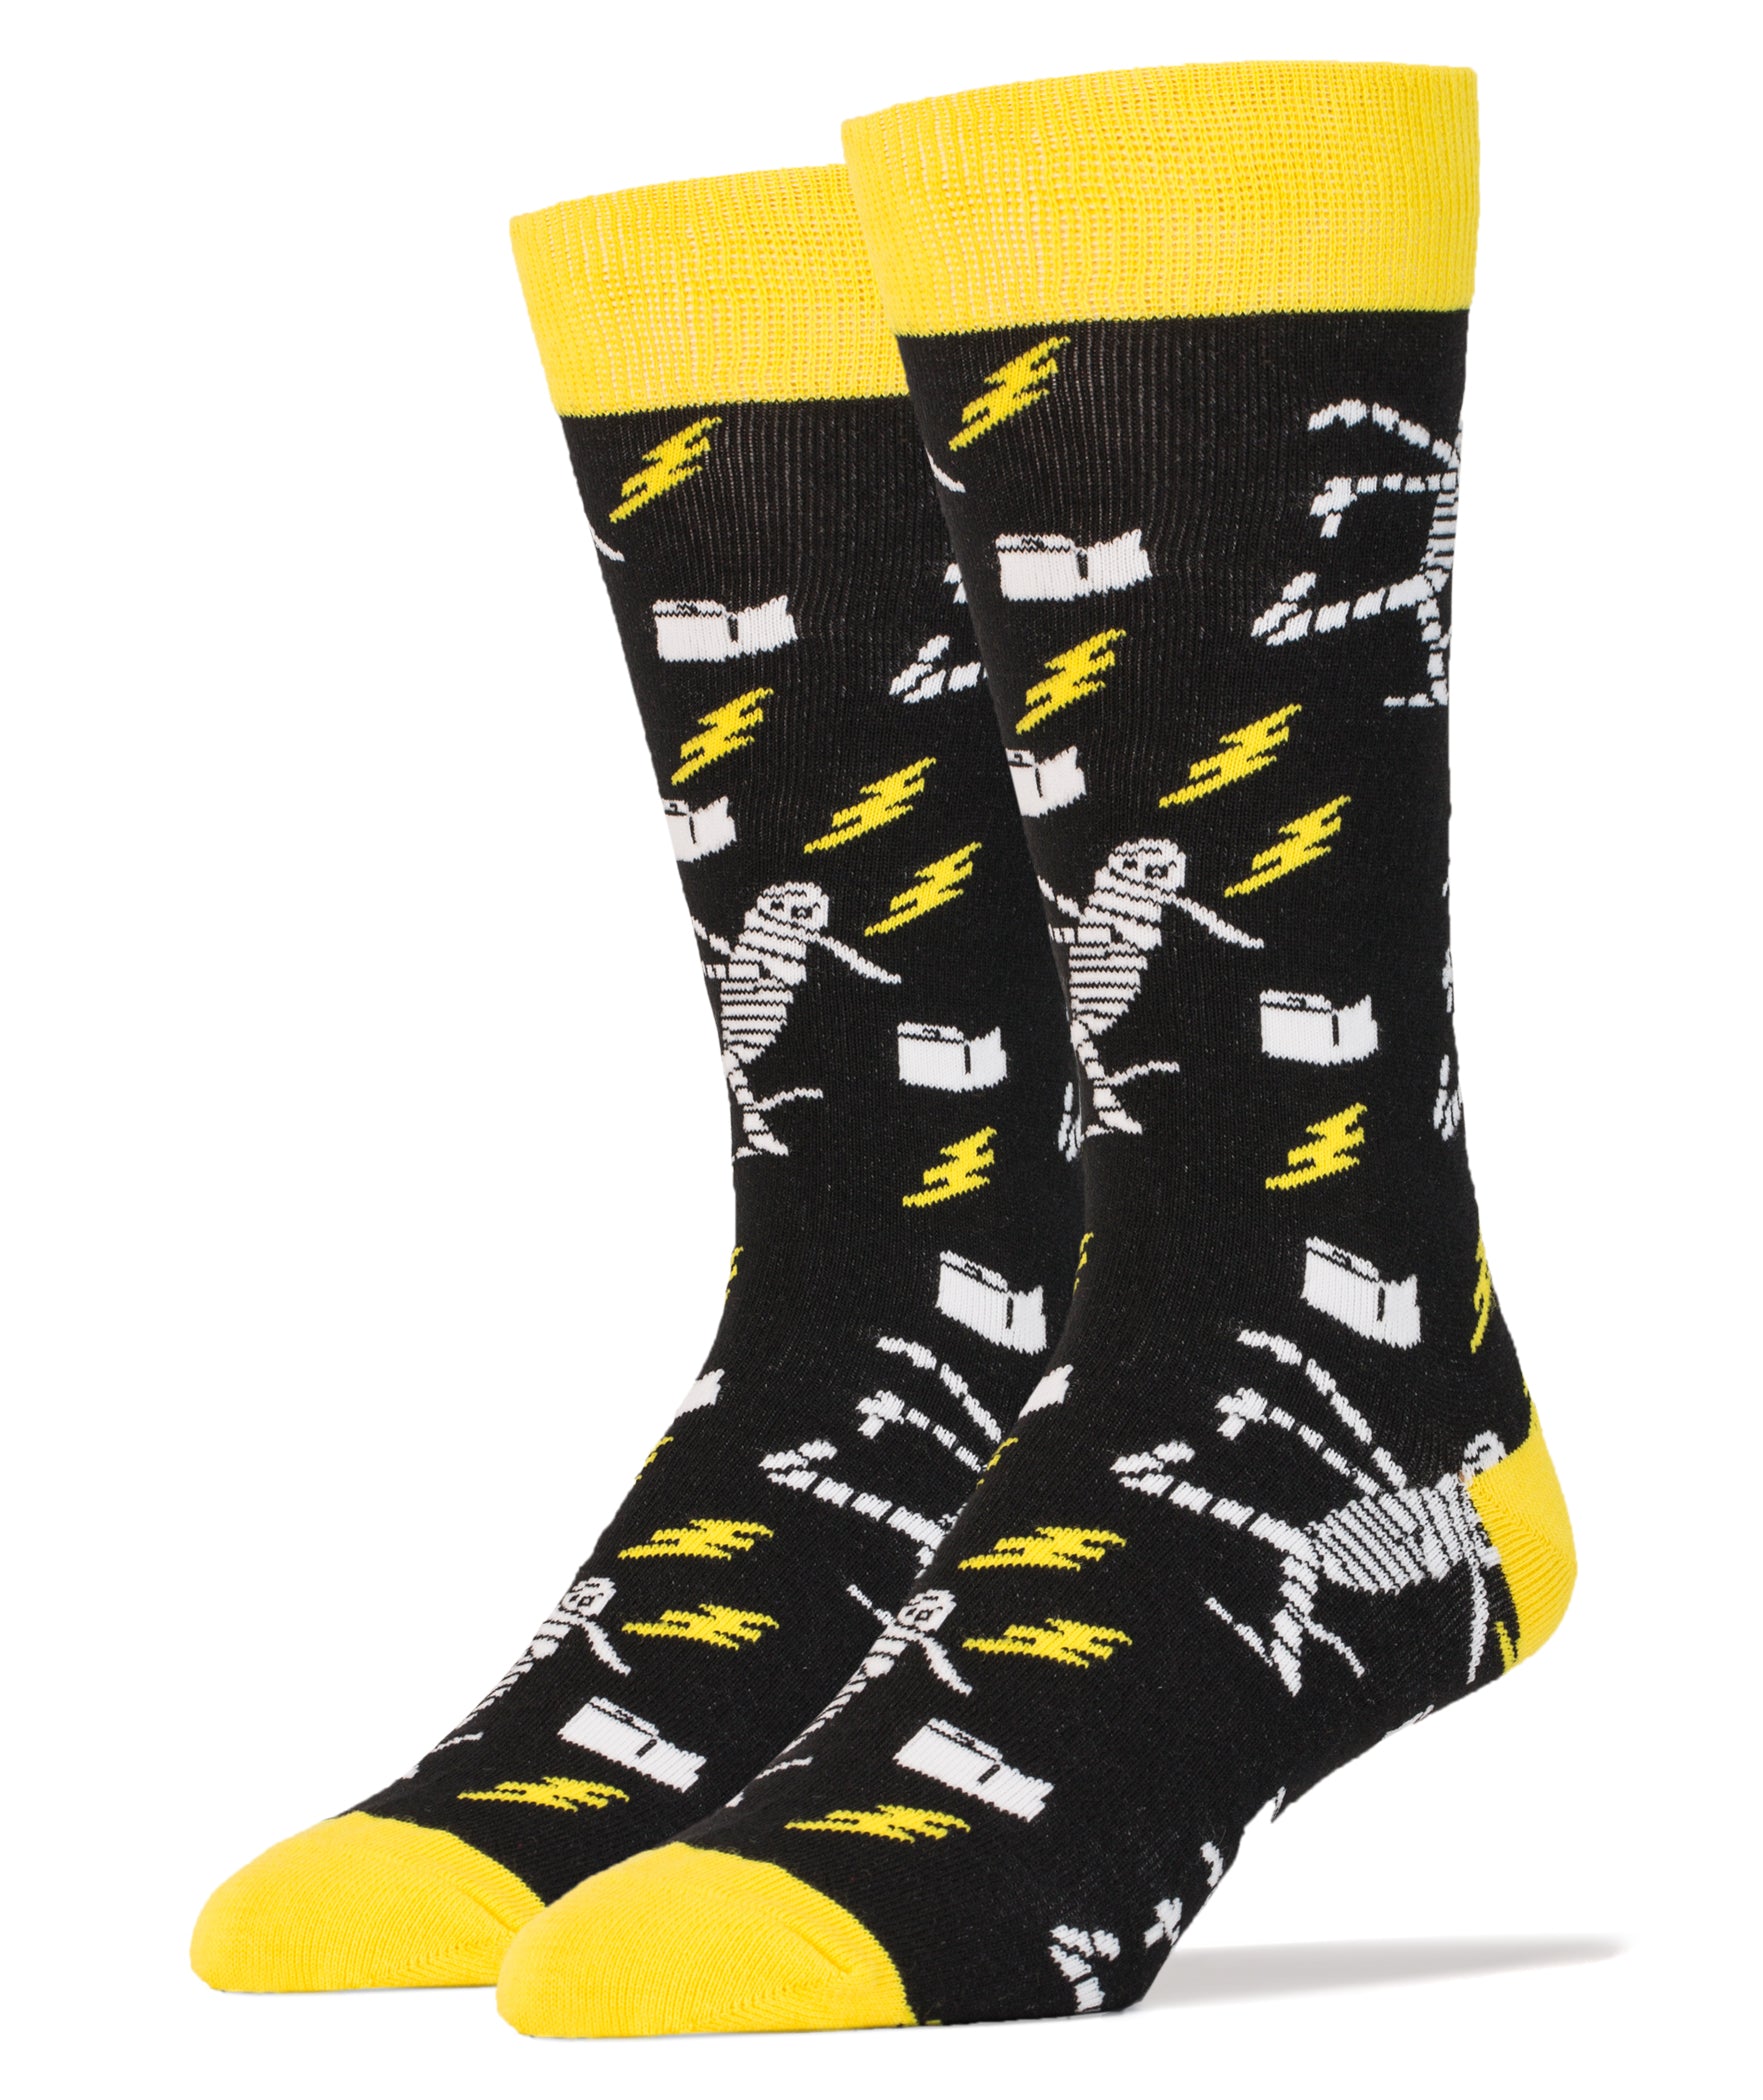 Mummy Party Socks | Halloween Crew Socks For Men